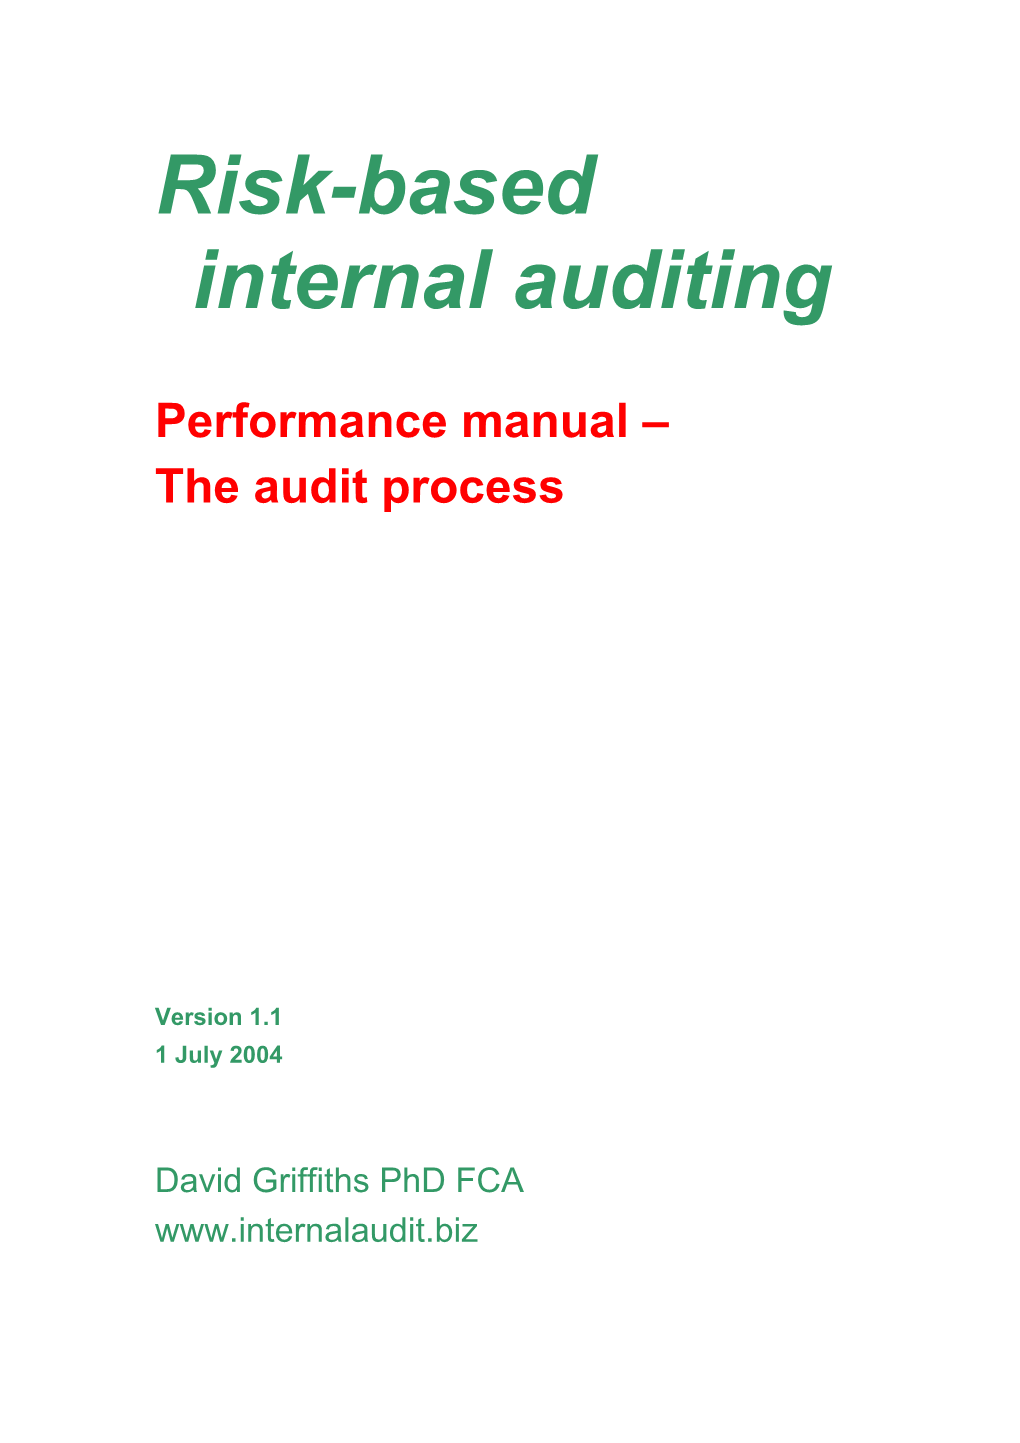 Performance Standards Manual